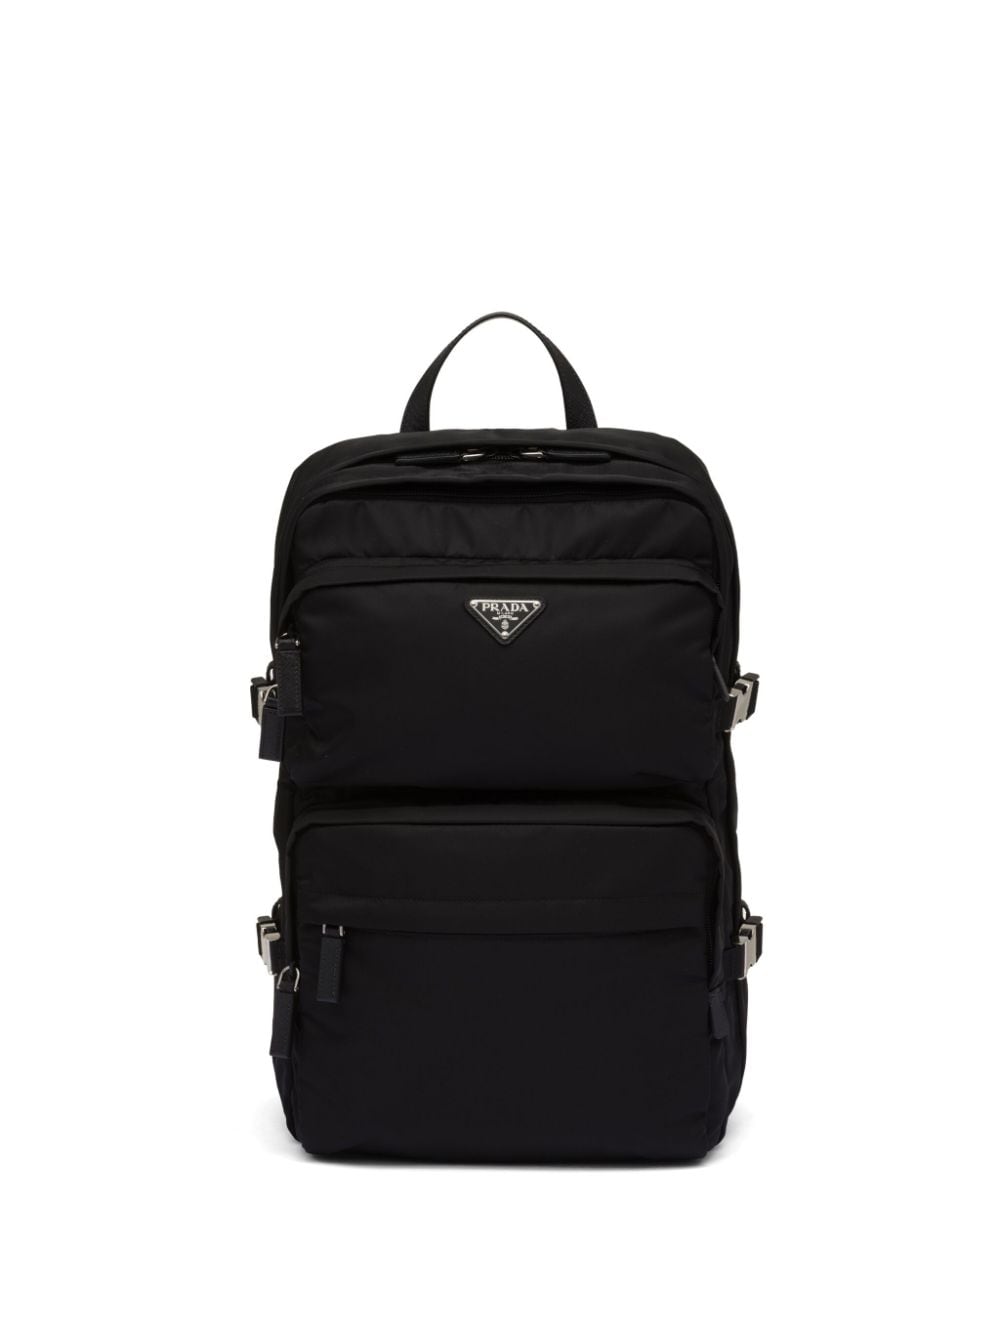 Prada Re-Nylon Saffiano leather backpack - Black